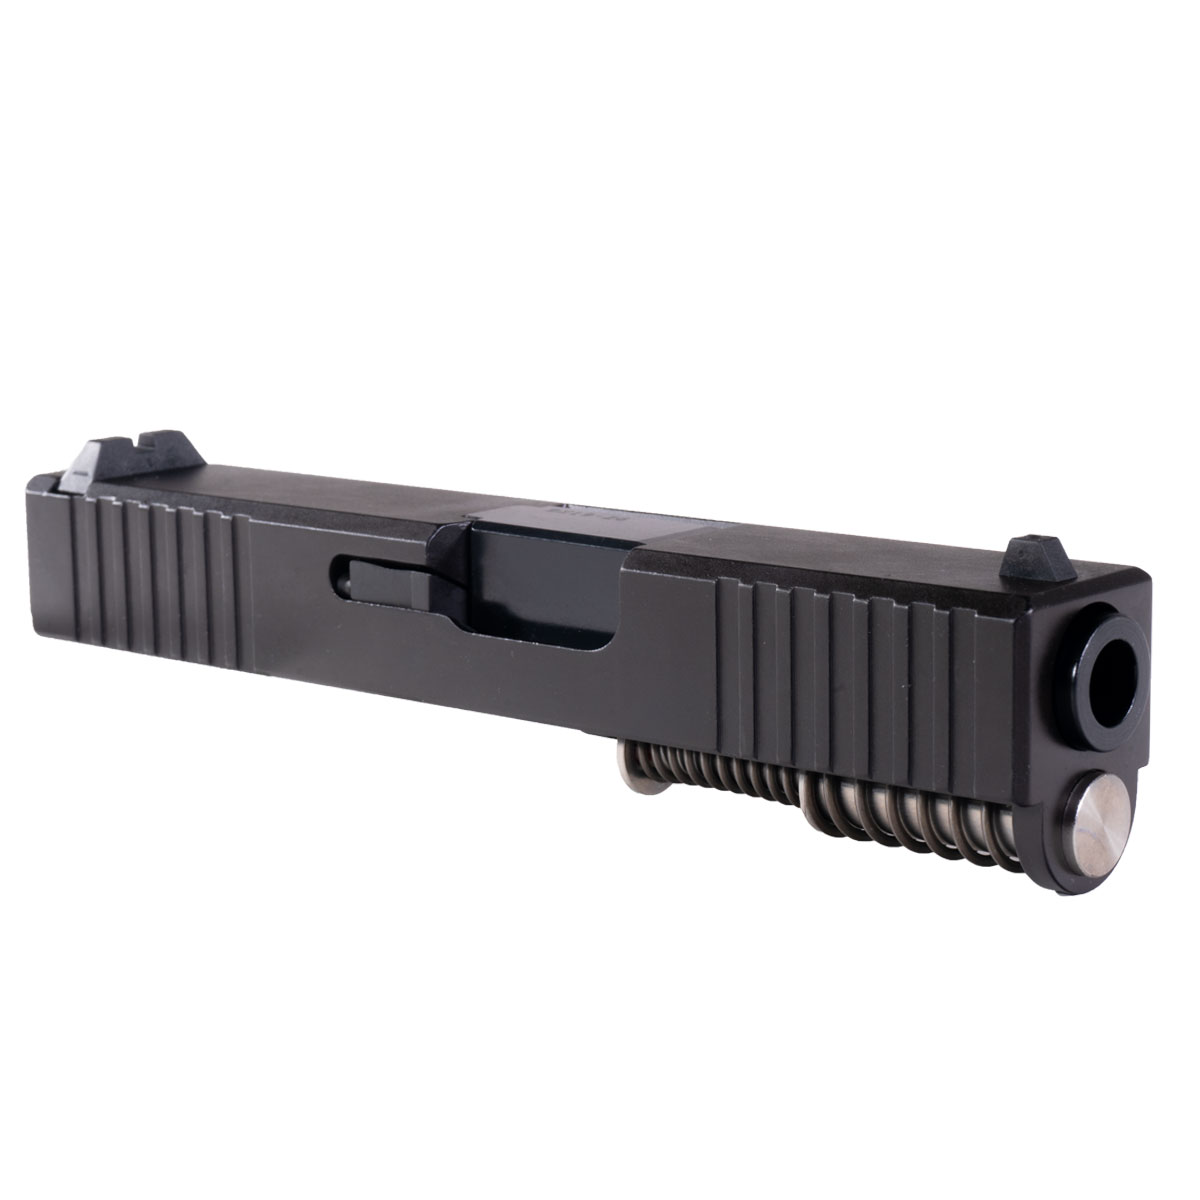 DTT 'Burly' 9mm Complete Slide Kit - Glock 26 Gen 1-2 Compatible